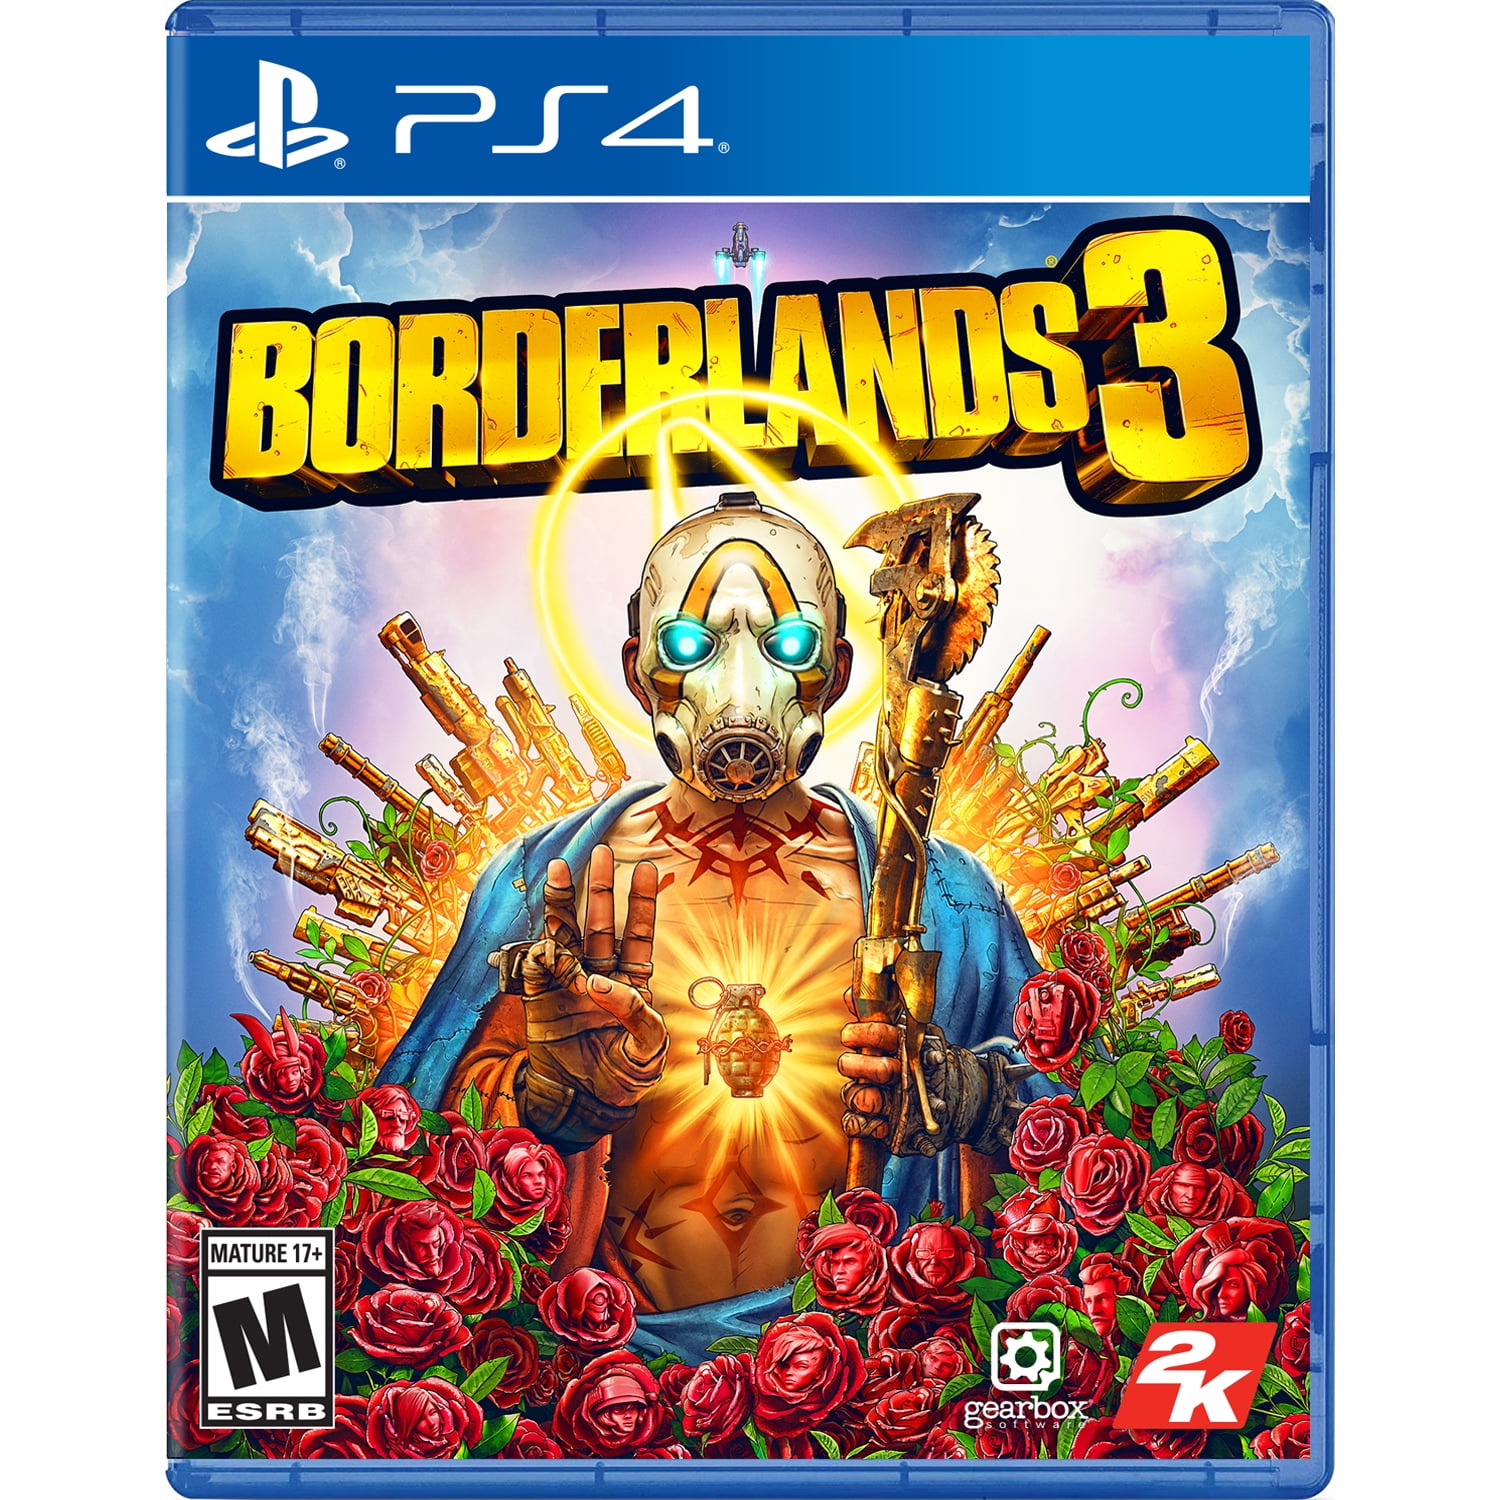 Borderlands 3 Take 2 Playstation 4 0710425574931 Walmart Com Walmart Com